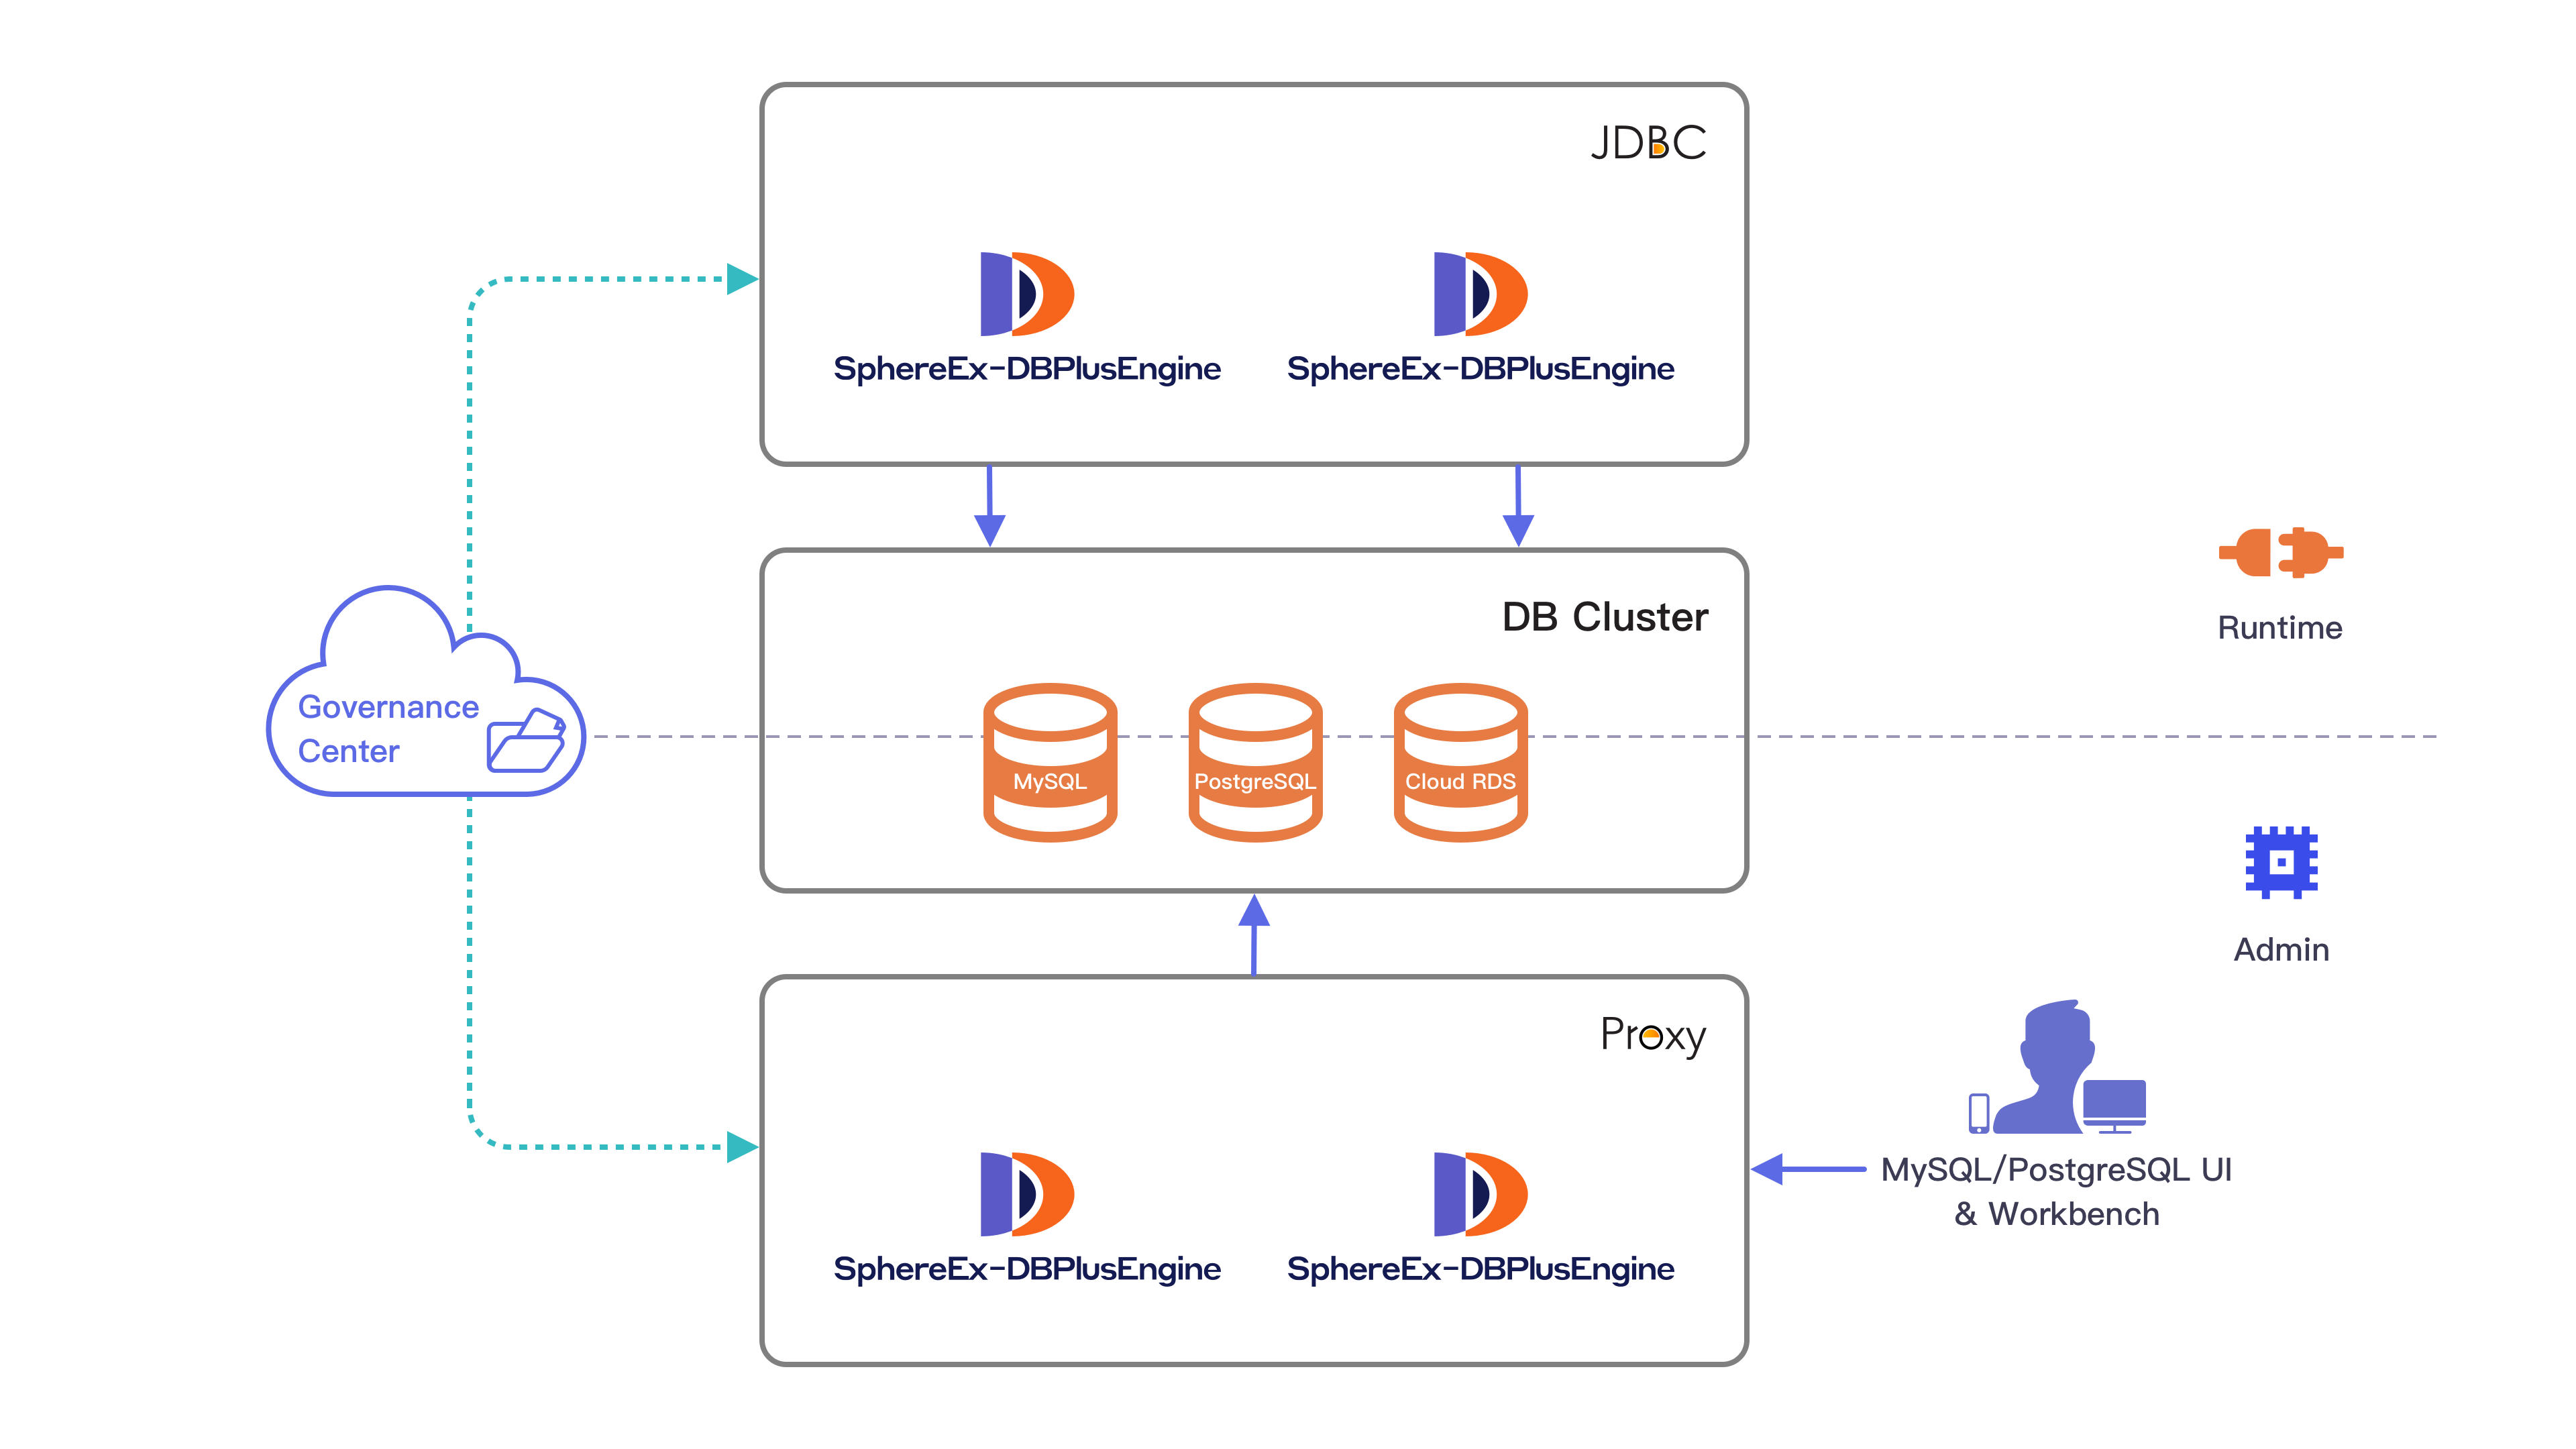 ShardingSphere Hybrid Architecture